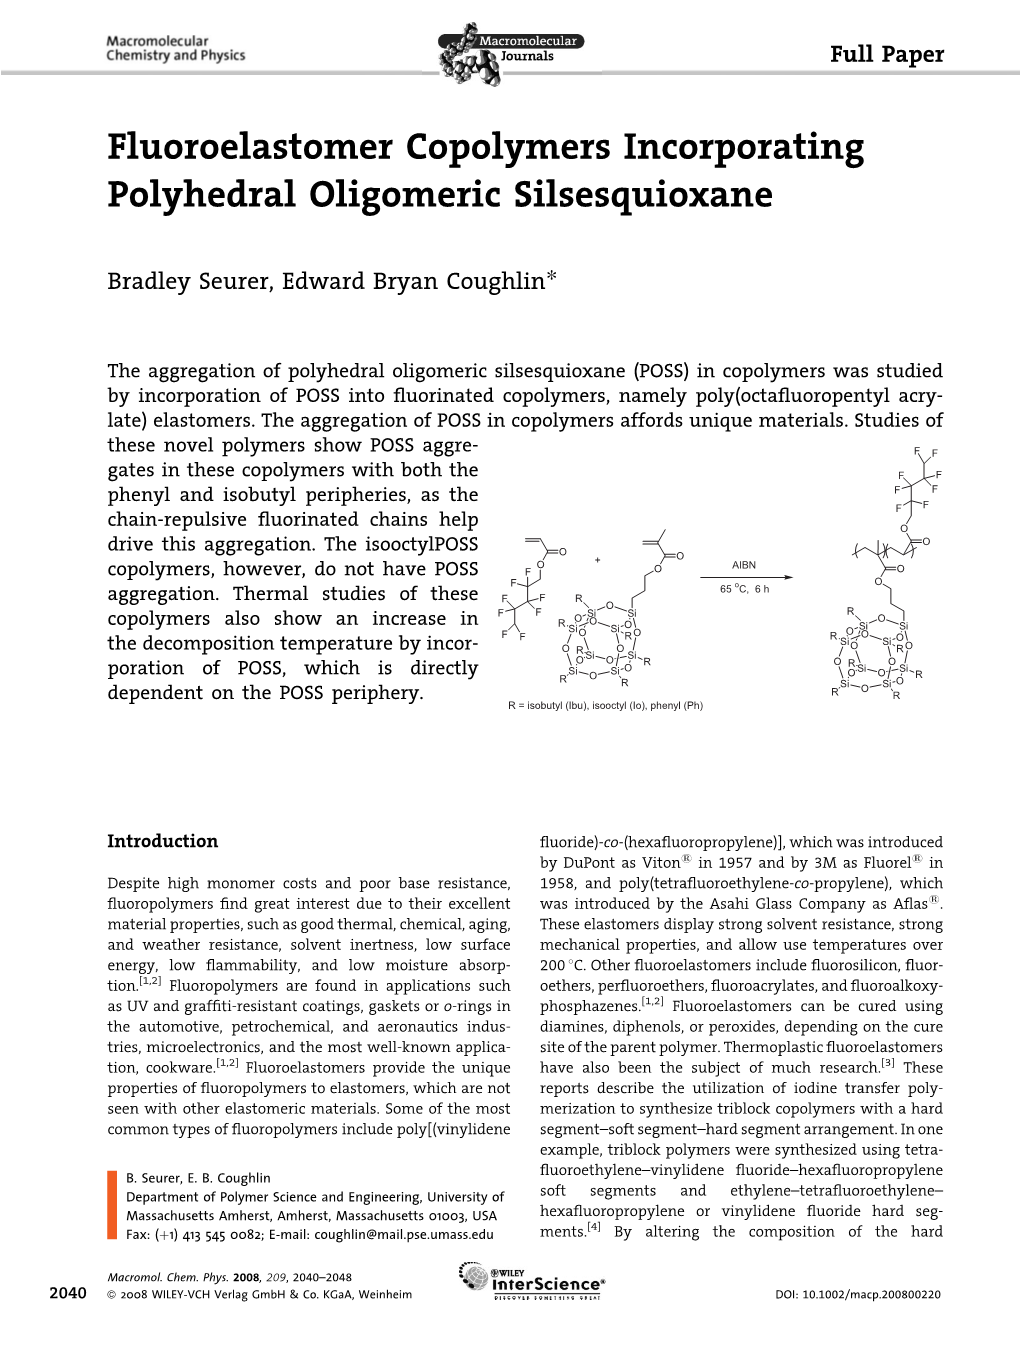 Fluoroelastomer Copolymers Incorporating Polyhedral Oligomeric Silsesquioxane